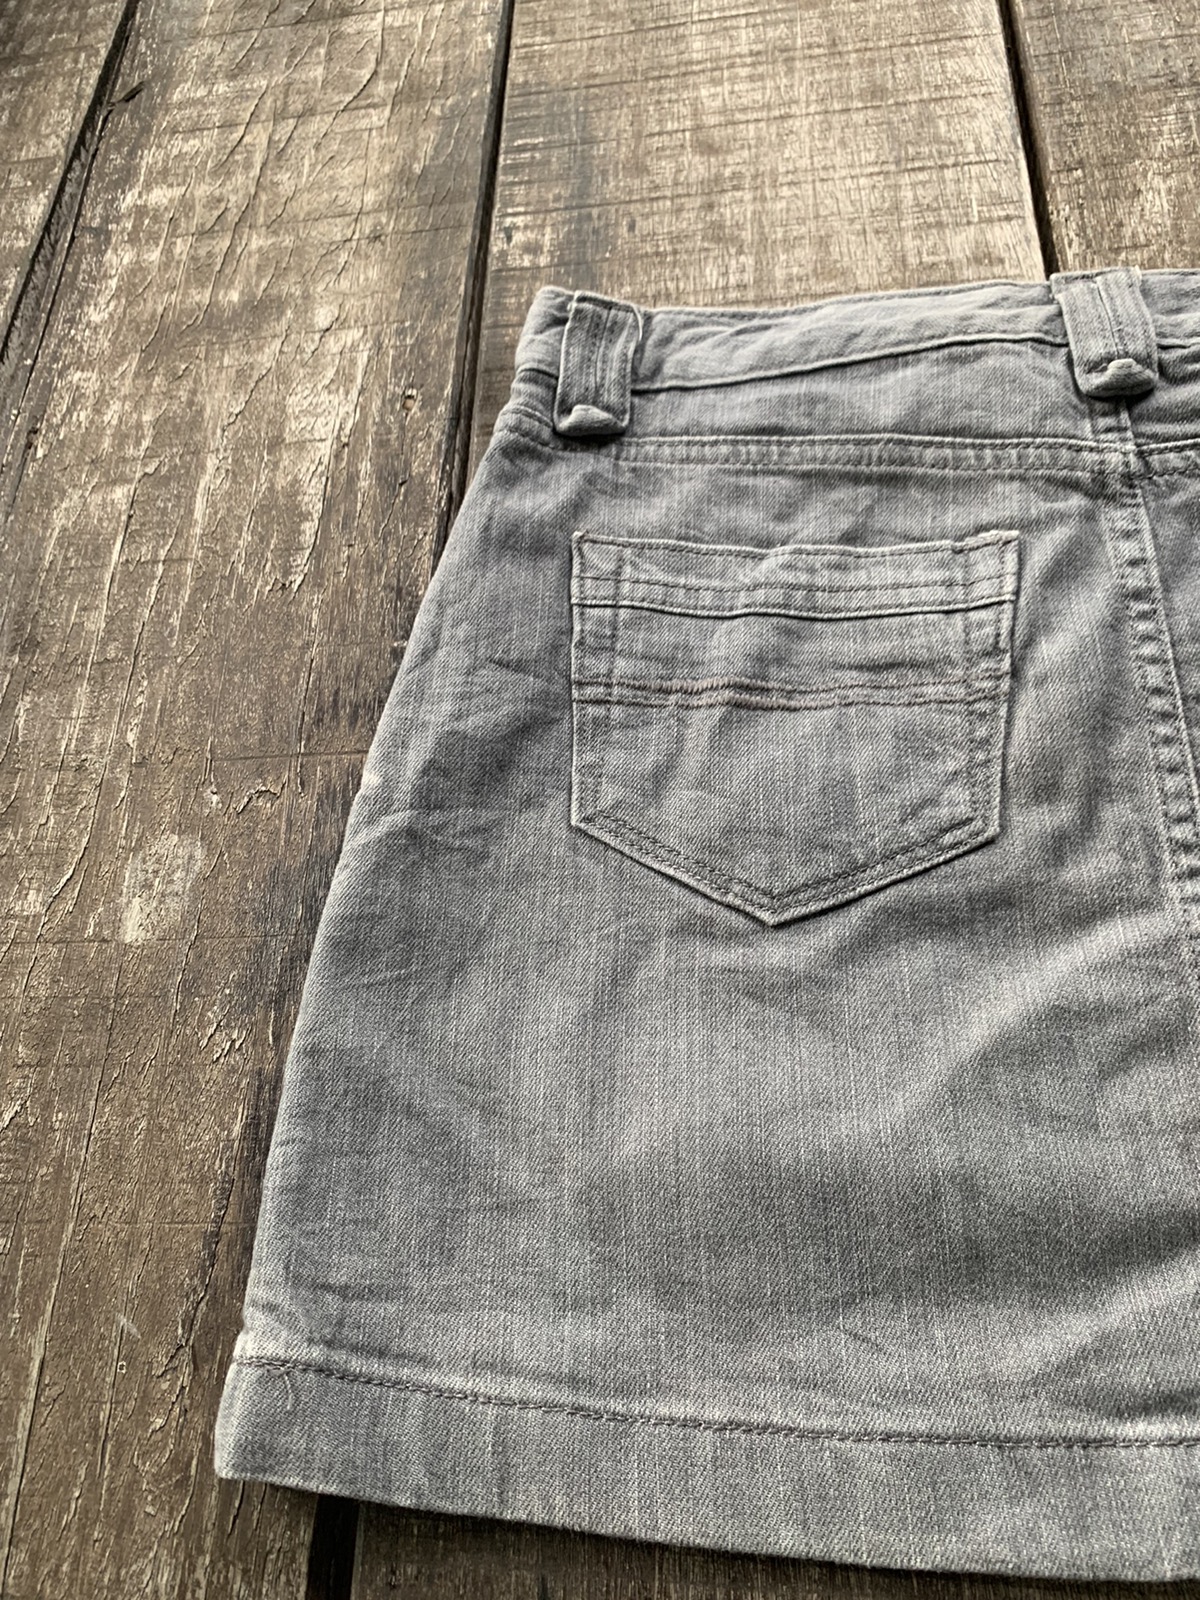 Patagonia jeans mini skirt - 4